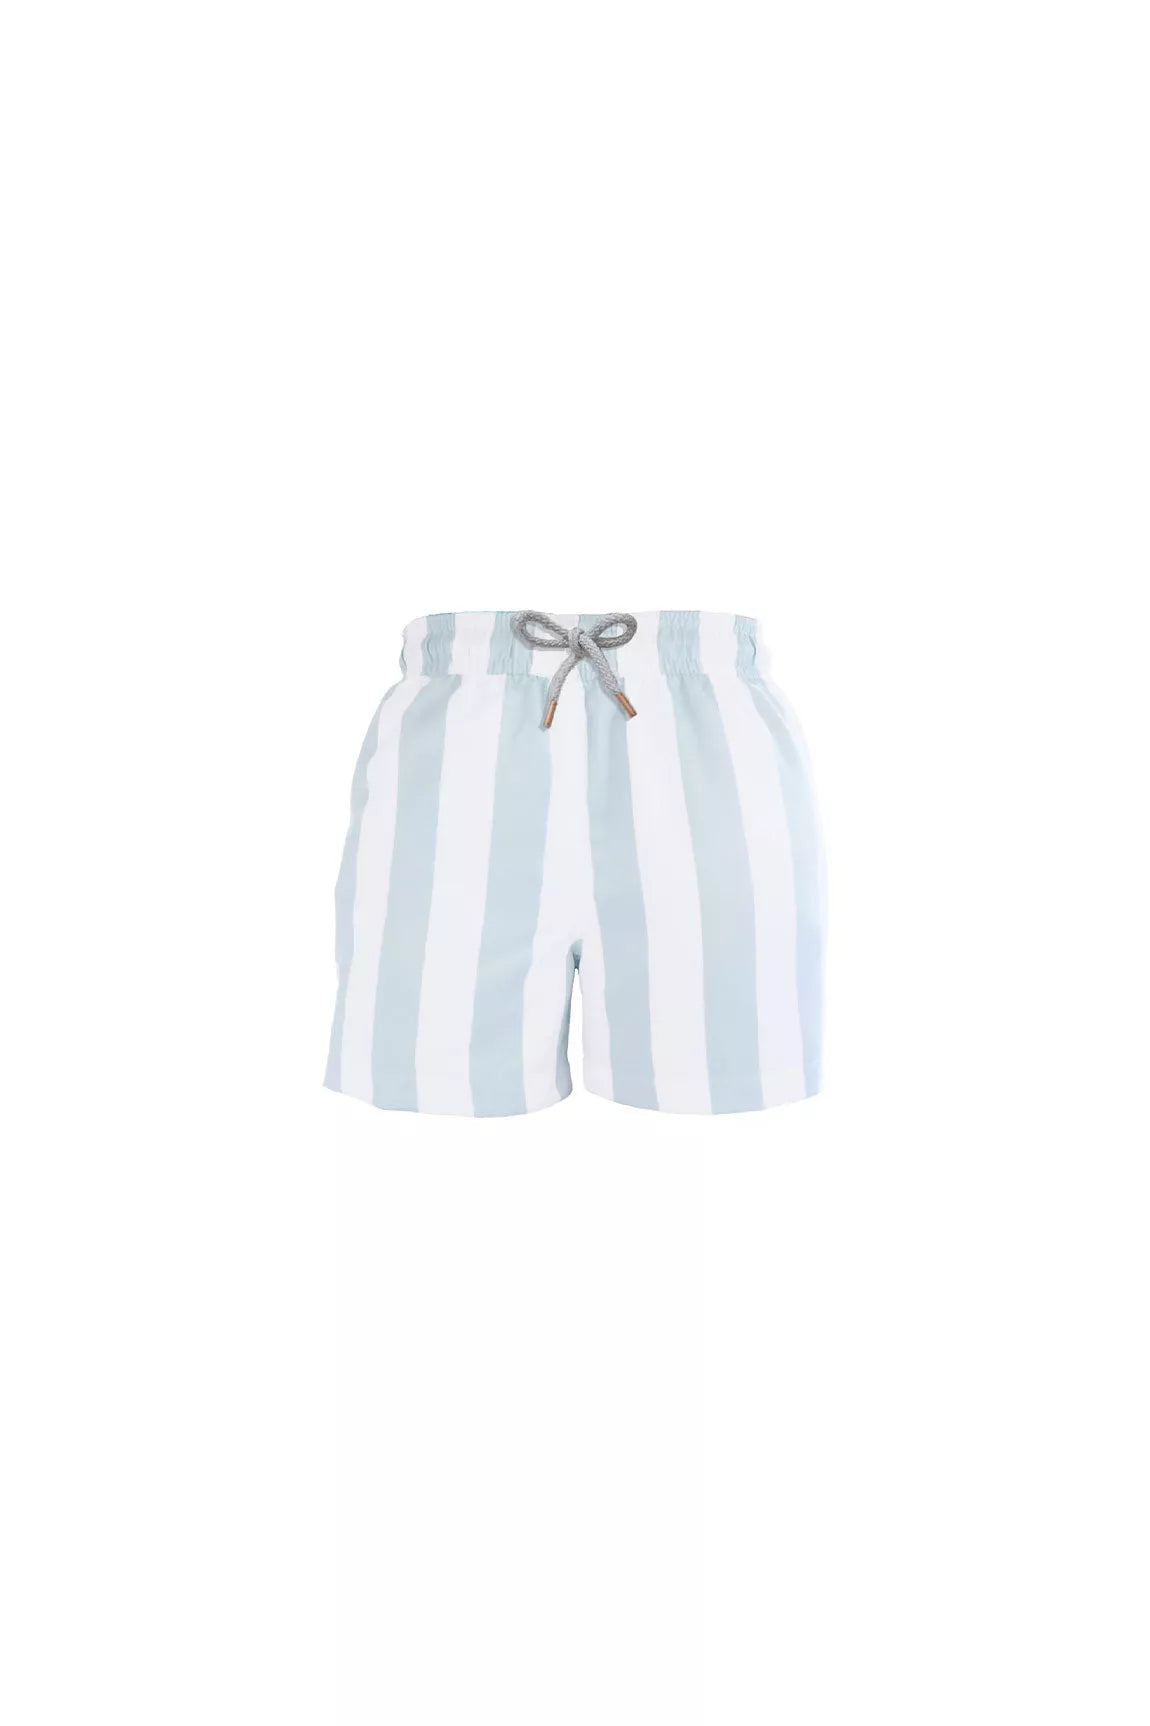 Pantaloneta Mini Swimmer Stripes Light Blue